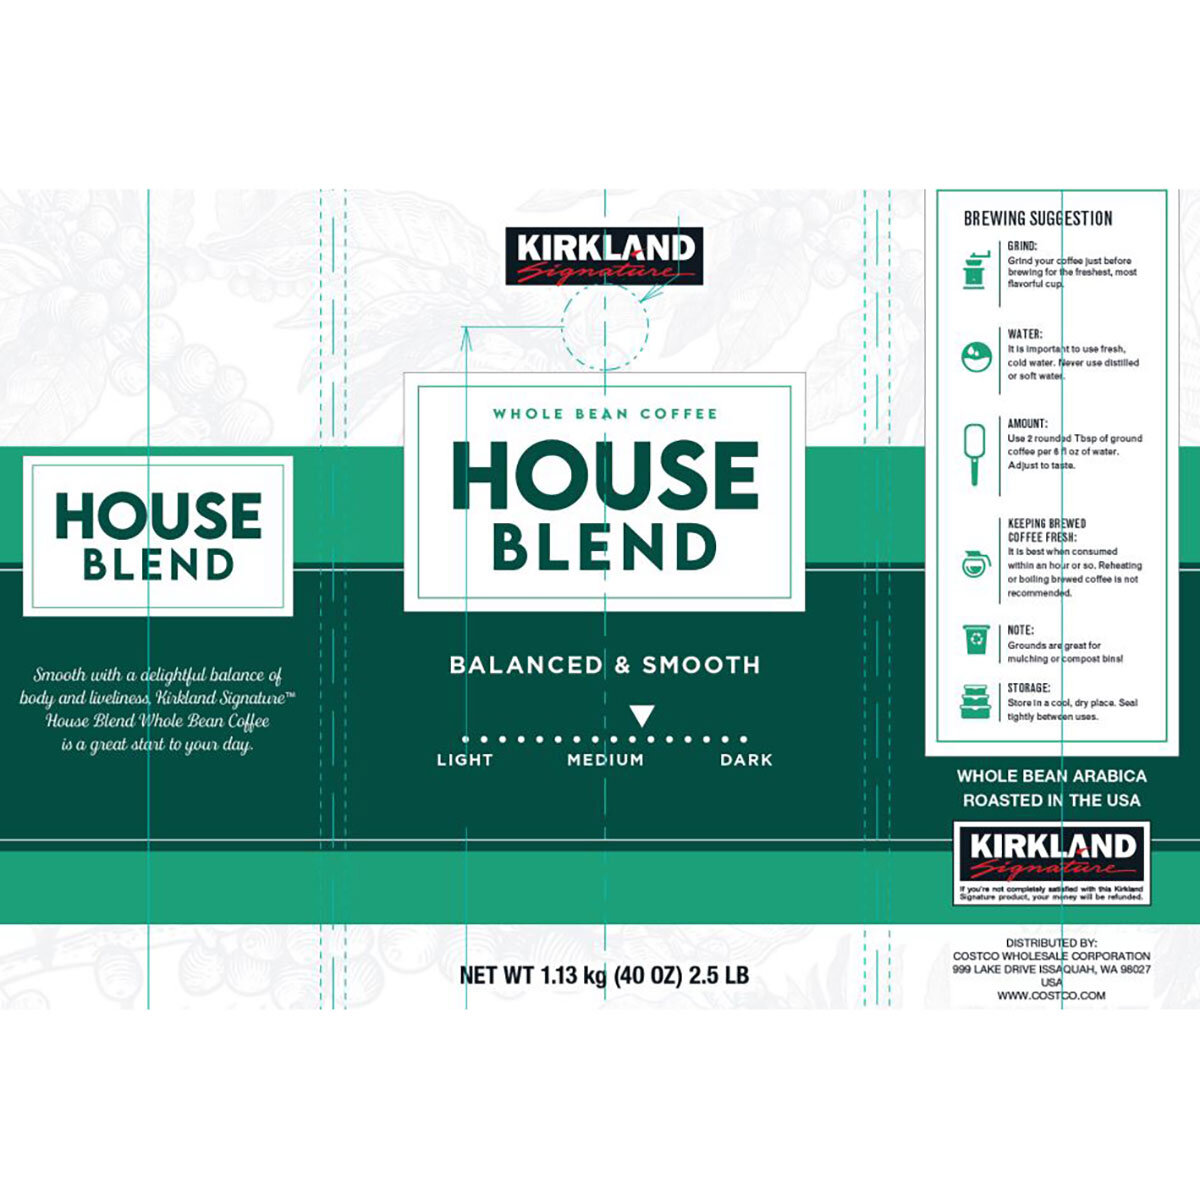 Kirkland Signature Whole Bean Coffee House Blend, 1.13kg